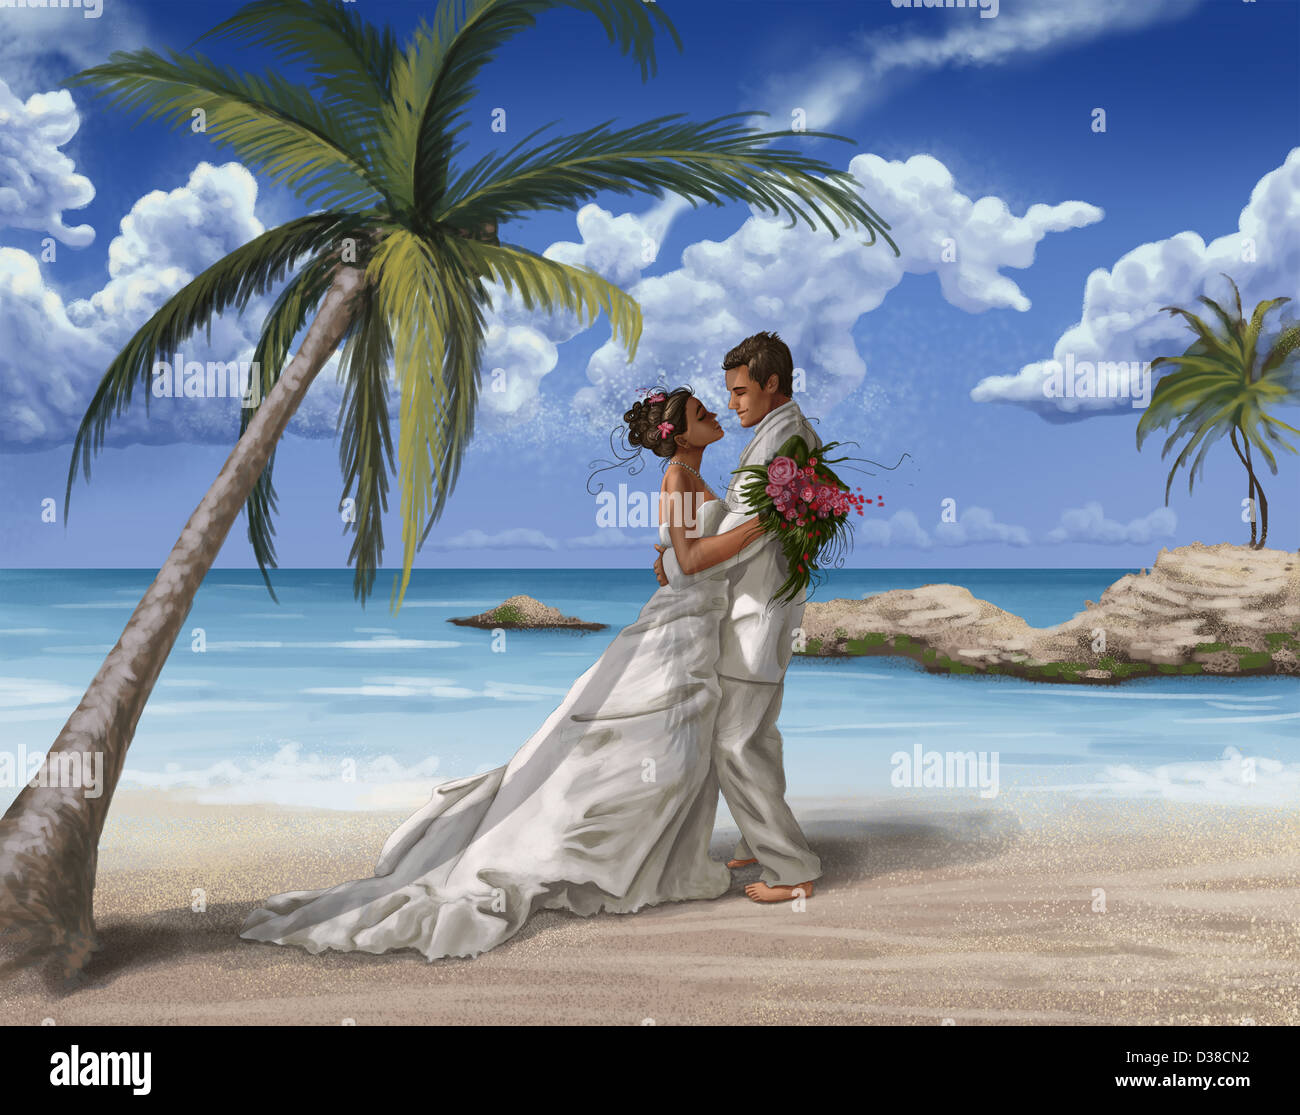 Illustrative image of newly wedded couple embracing on beach Stock Photo